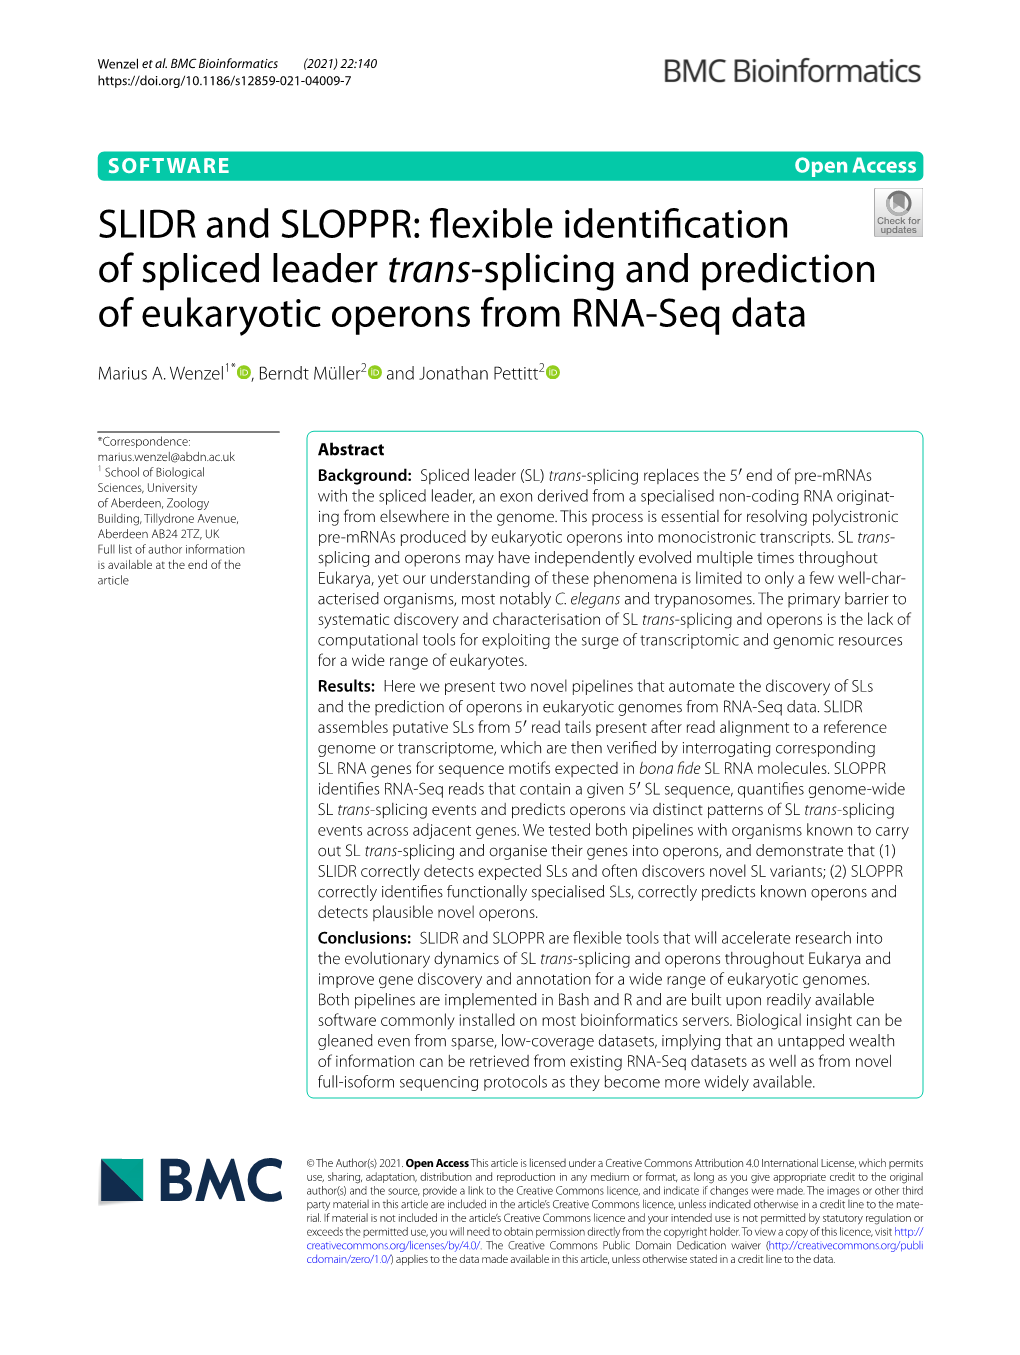 SLIDR and SLOPPR: Flexible Identification of Spliced Leader